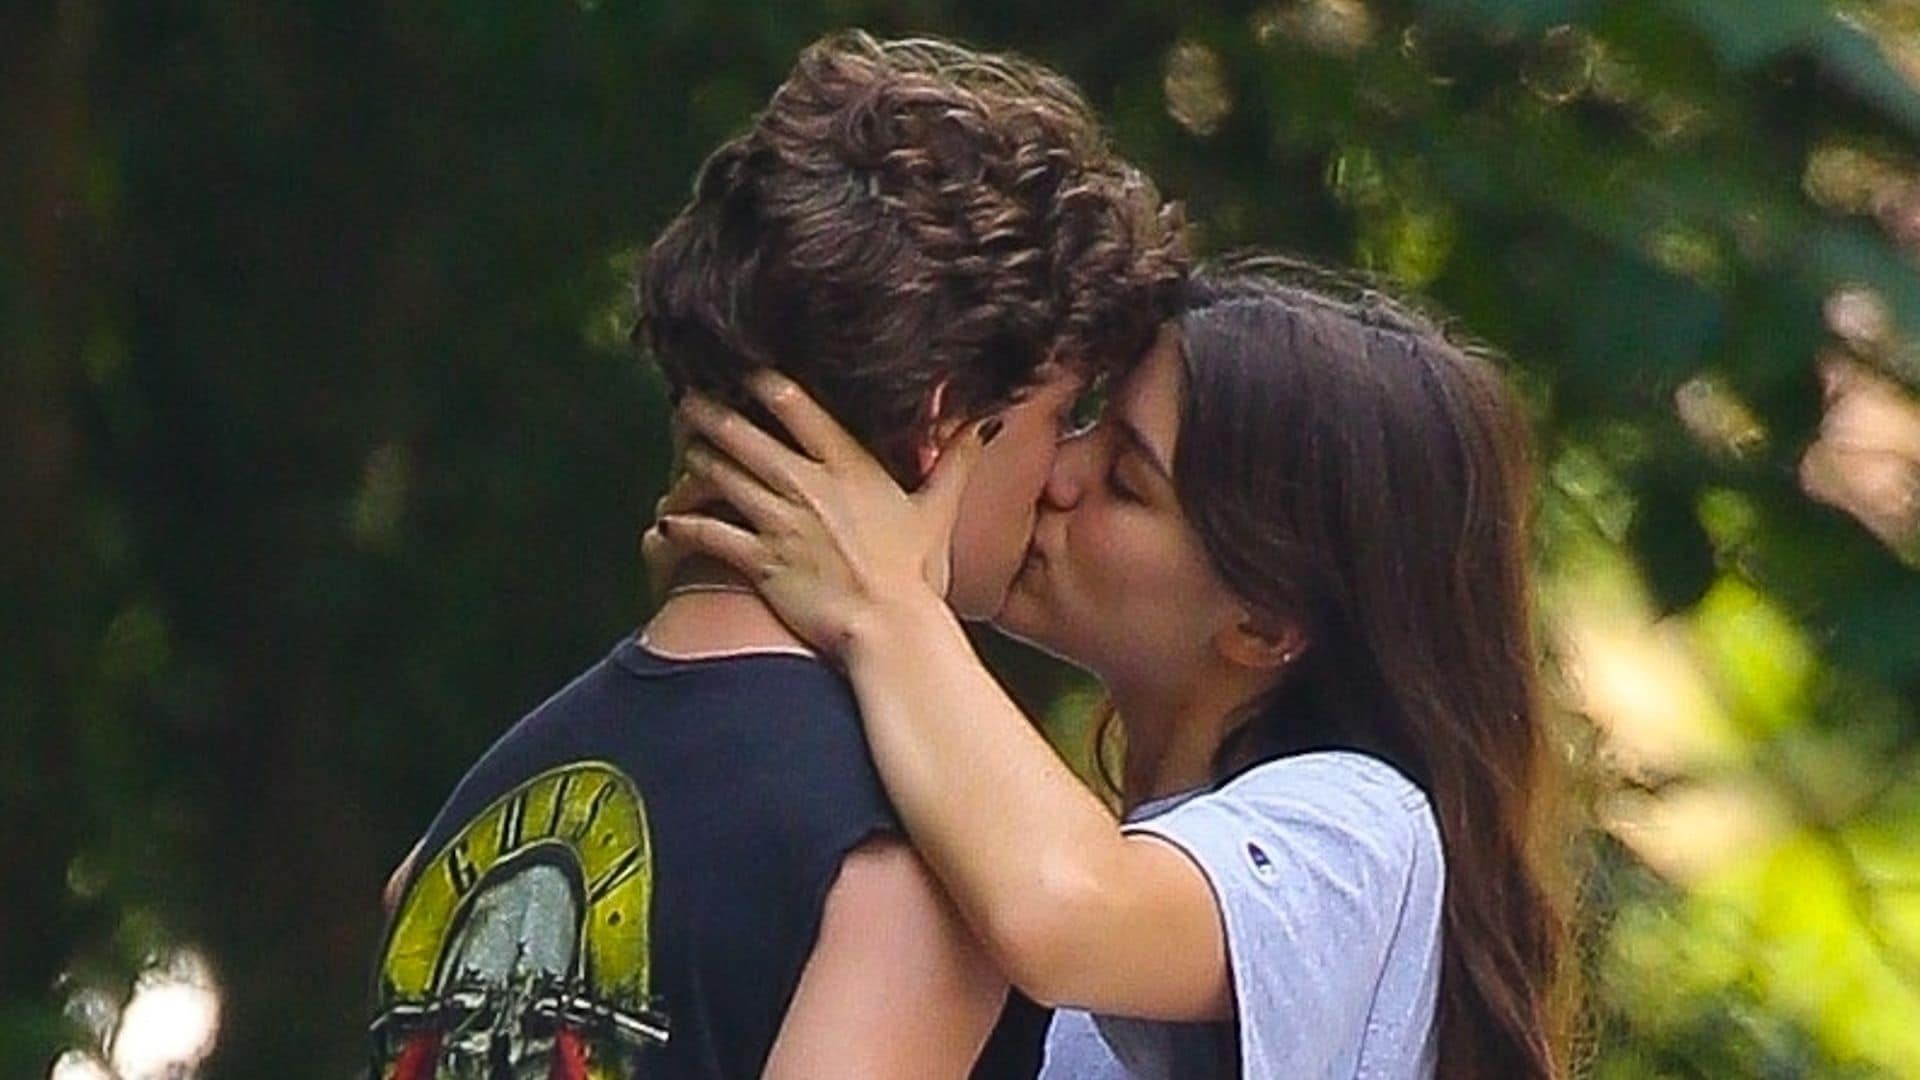 Suri Cruise looks happy in love kissing her boyfriend Toby Cohen in Central Park